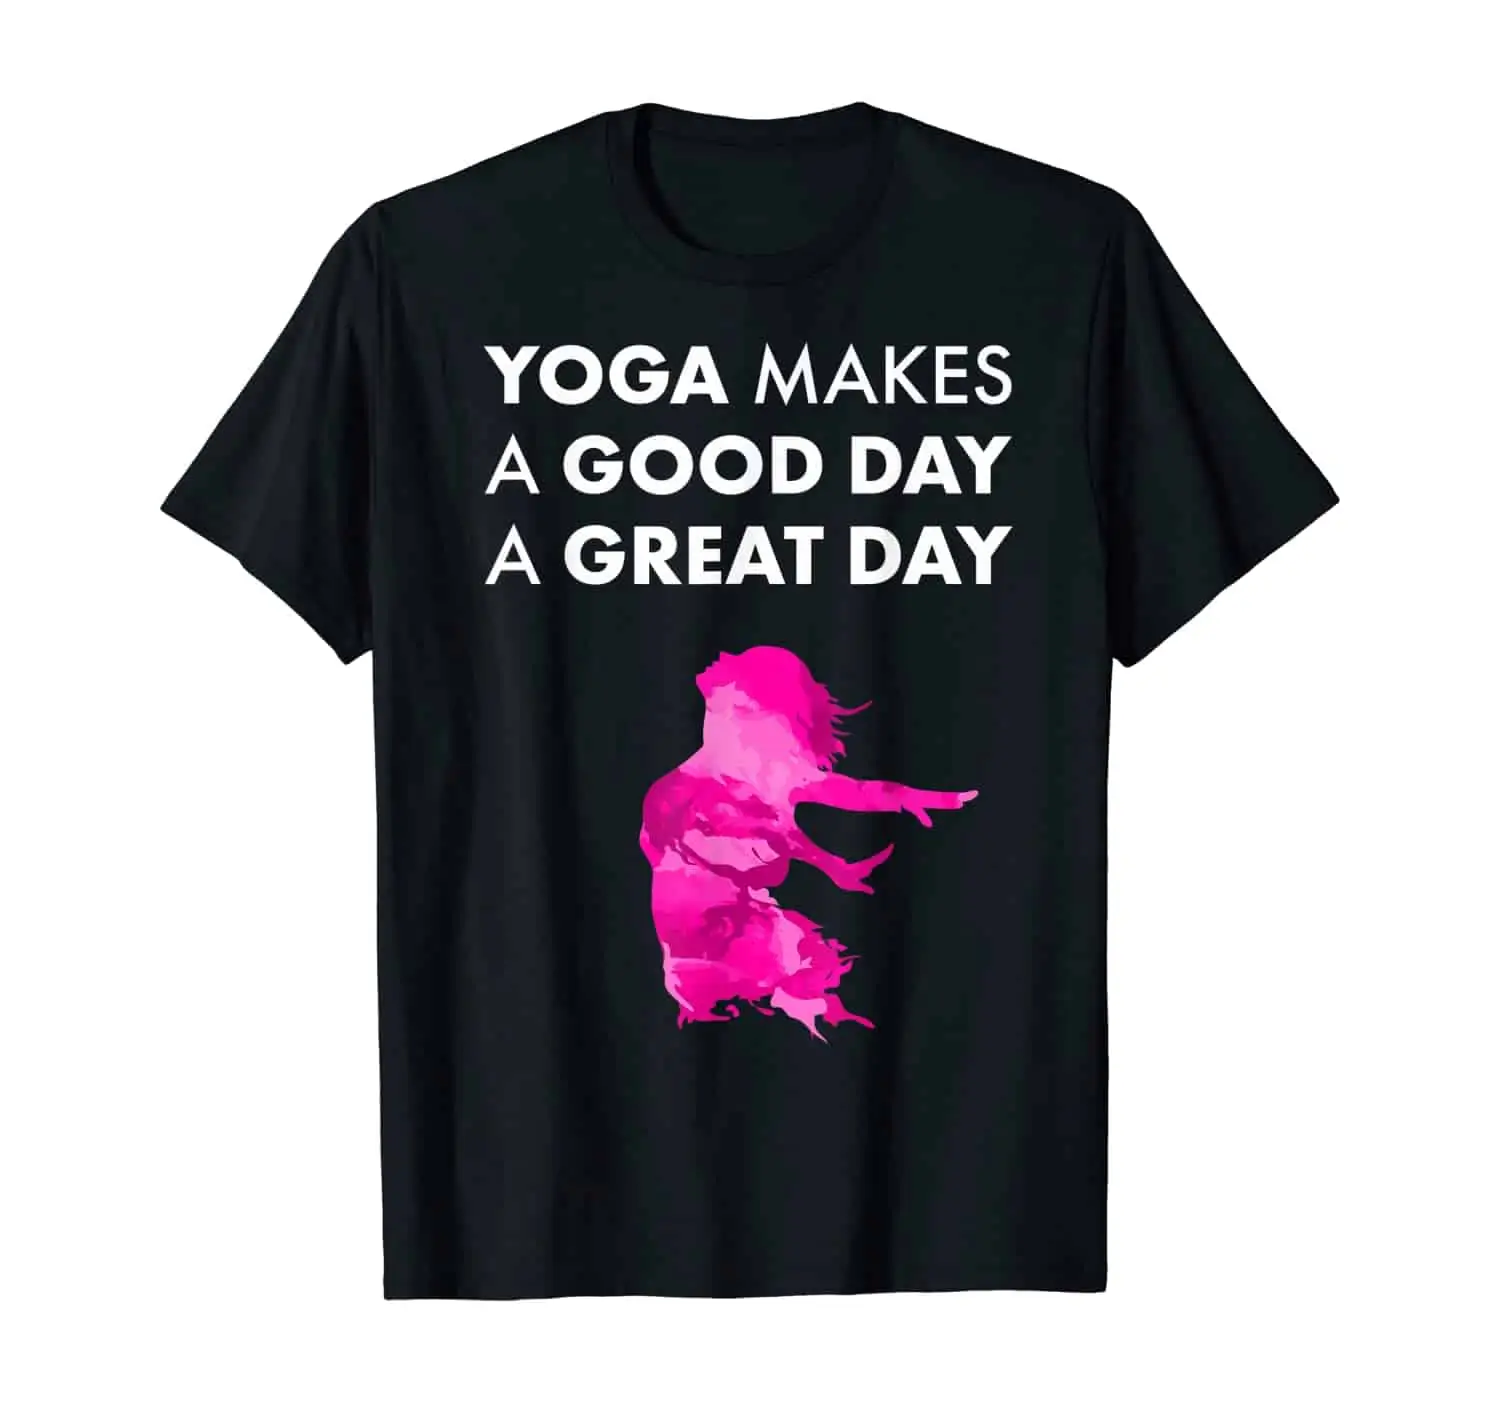 Yoga, Yogalehrer, Namaste, Meditation, Yoga Motiv, Yoga Fan, Yogalehrer, Frauenpower, Yoga übungen, Yoga Matte, spirituell, T-Shirt Design, T-Shirt Motiv, Yoga T-Shirt Motiv, T-shirt Designer, Geschenk, Geschenkidee